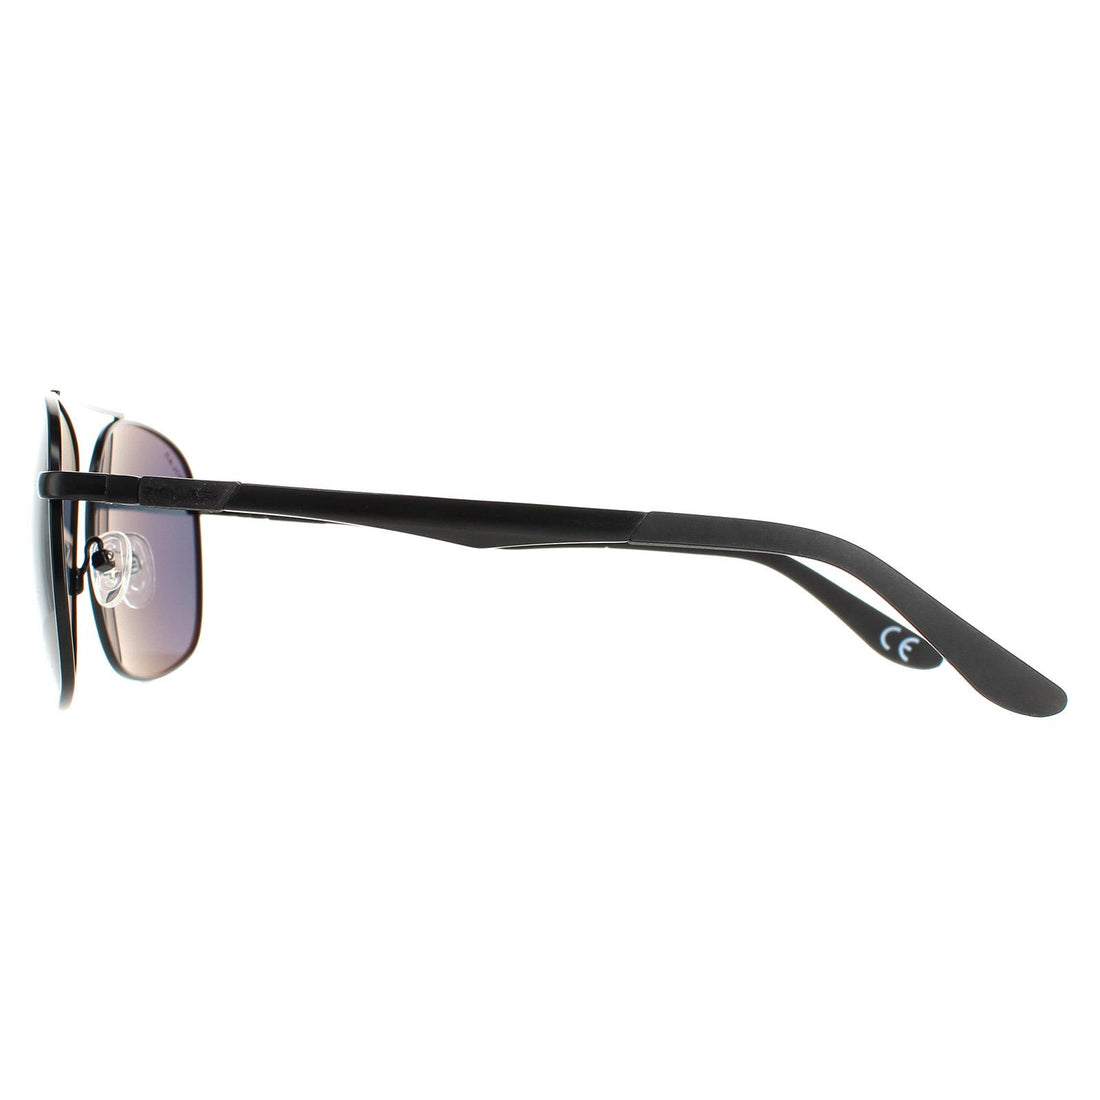 Polar 755 Sunglasses